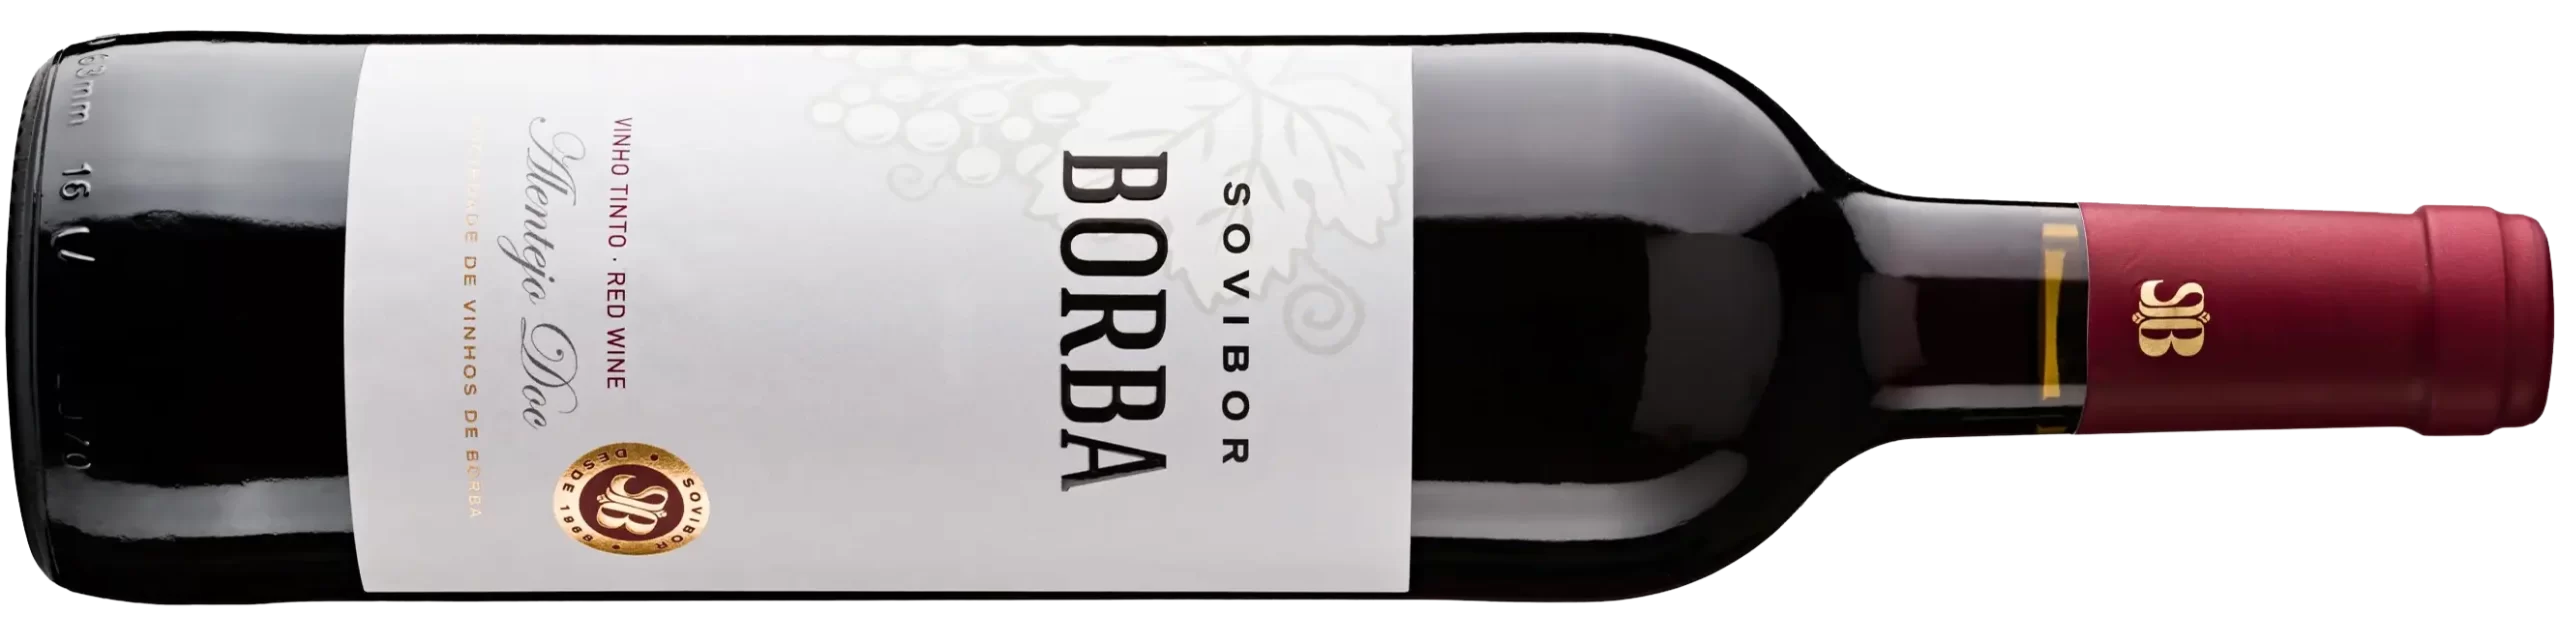 sovibor-wine-botle